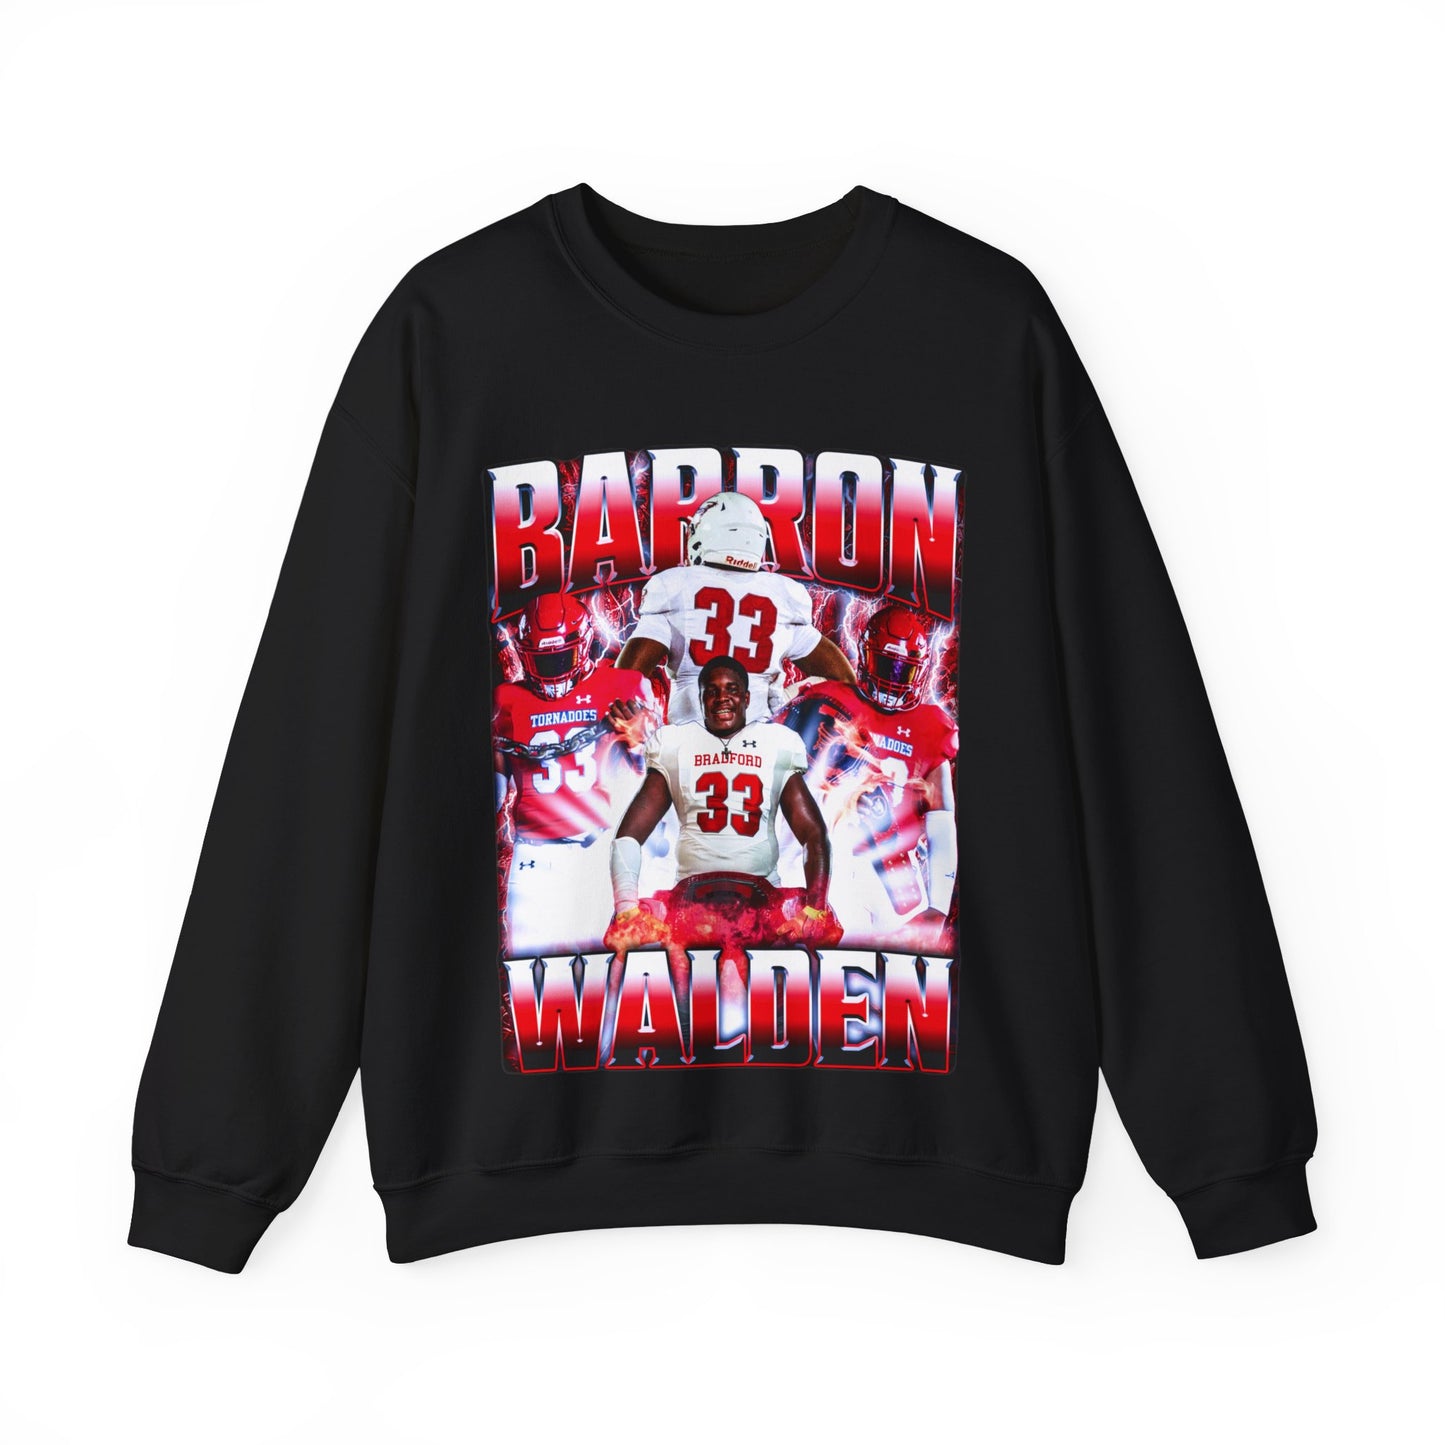 Barron Walden Crewneck Sweatshirt